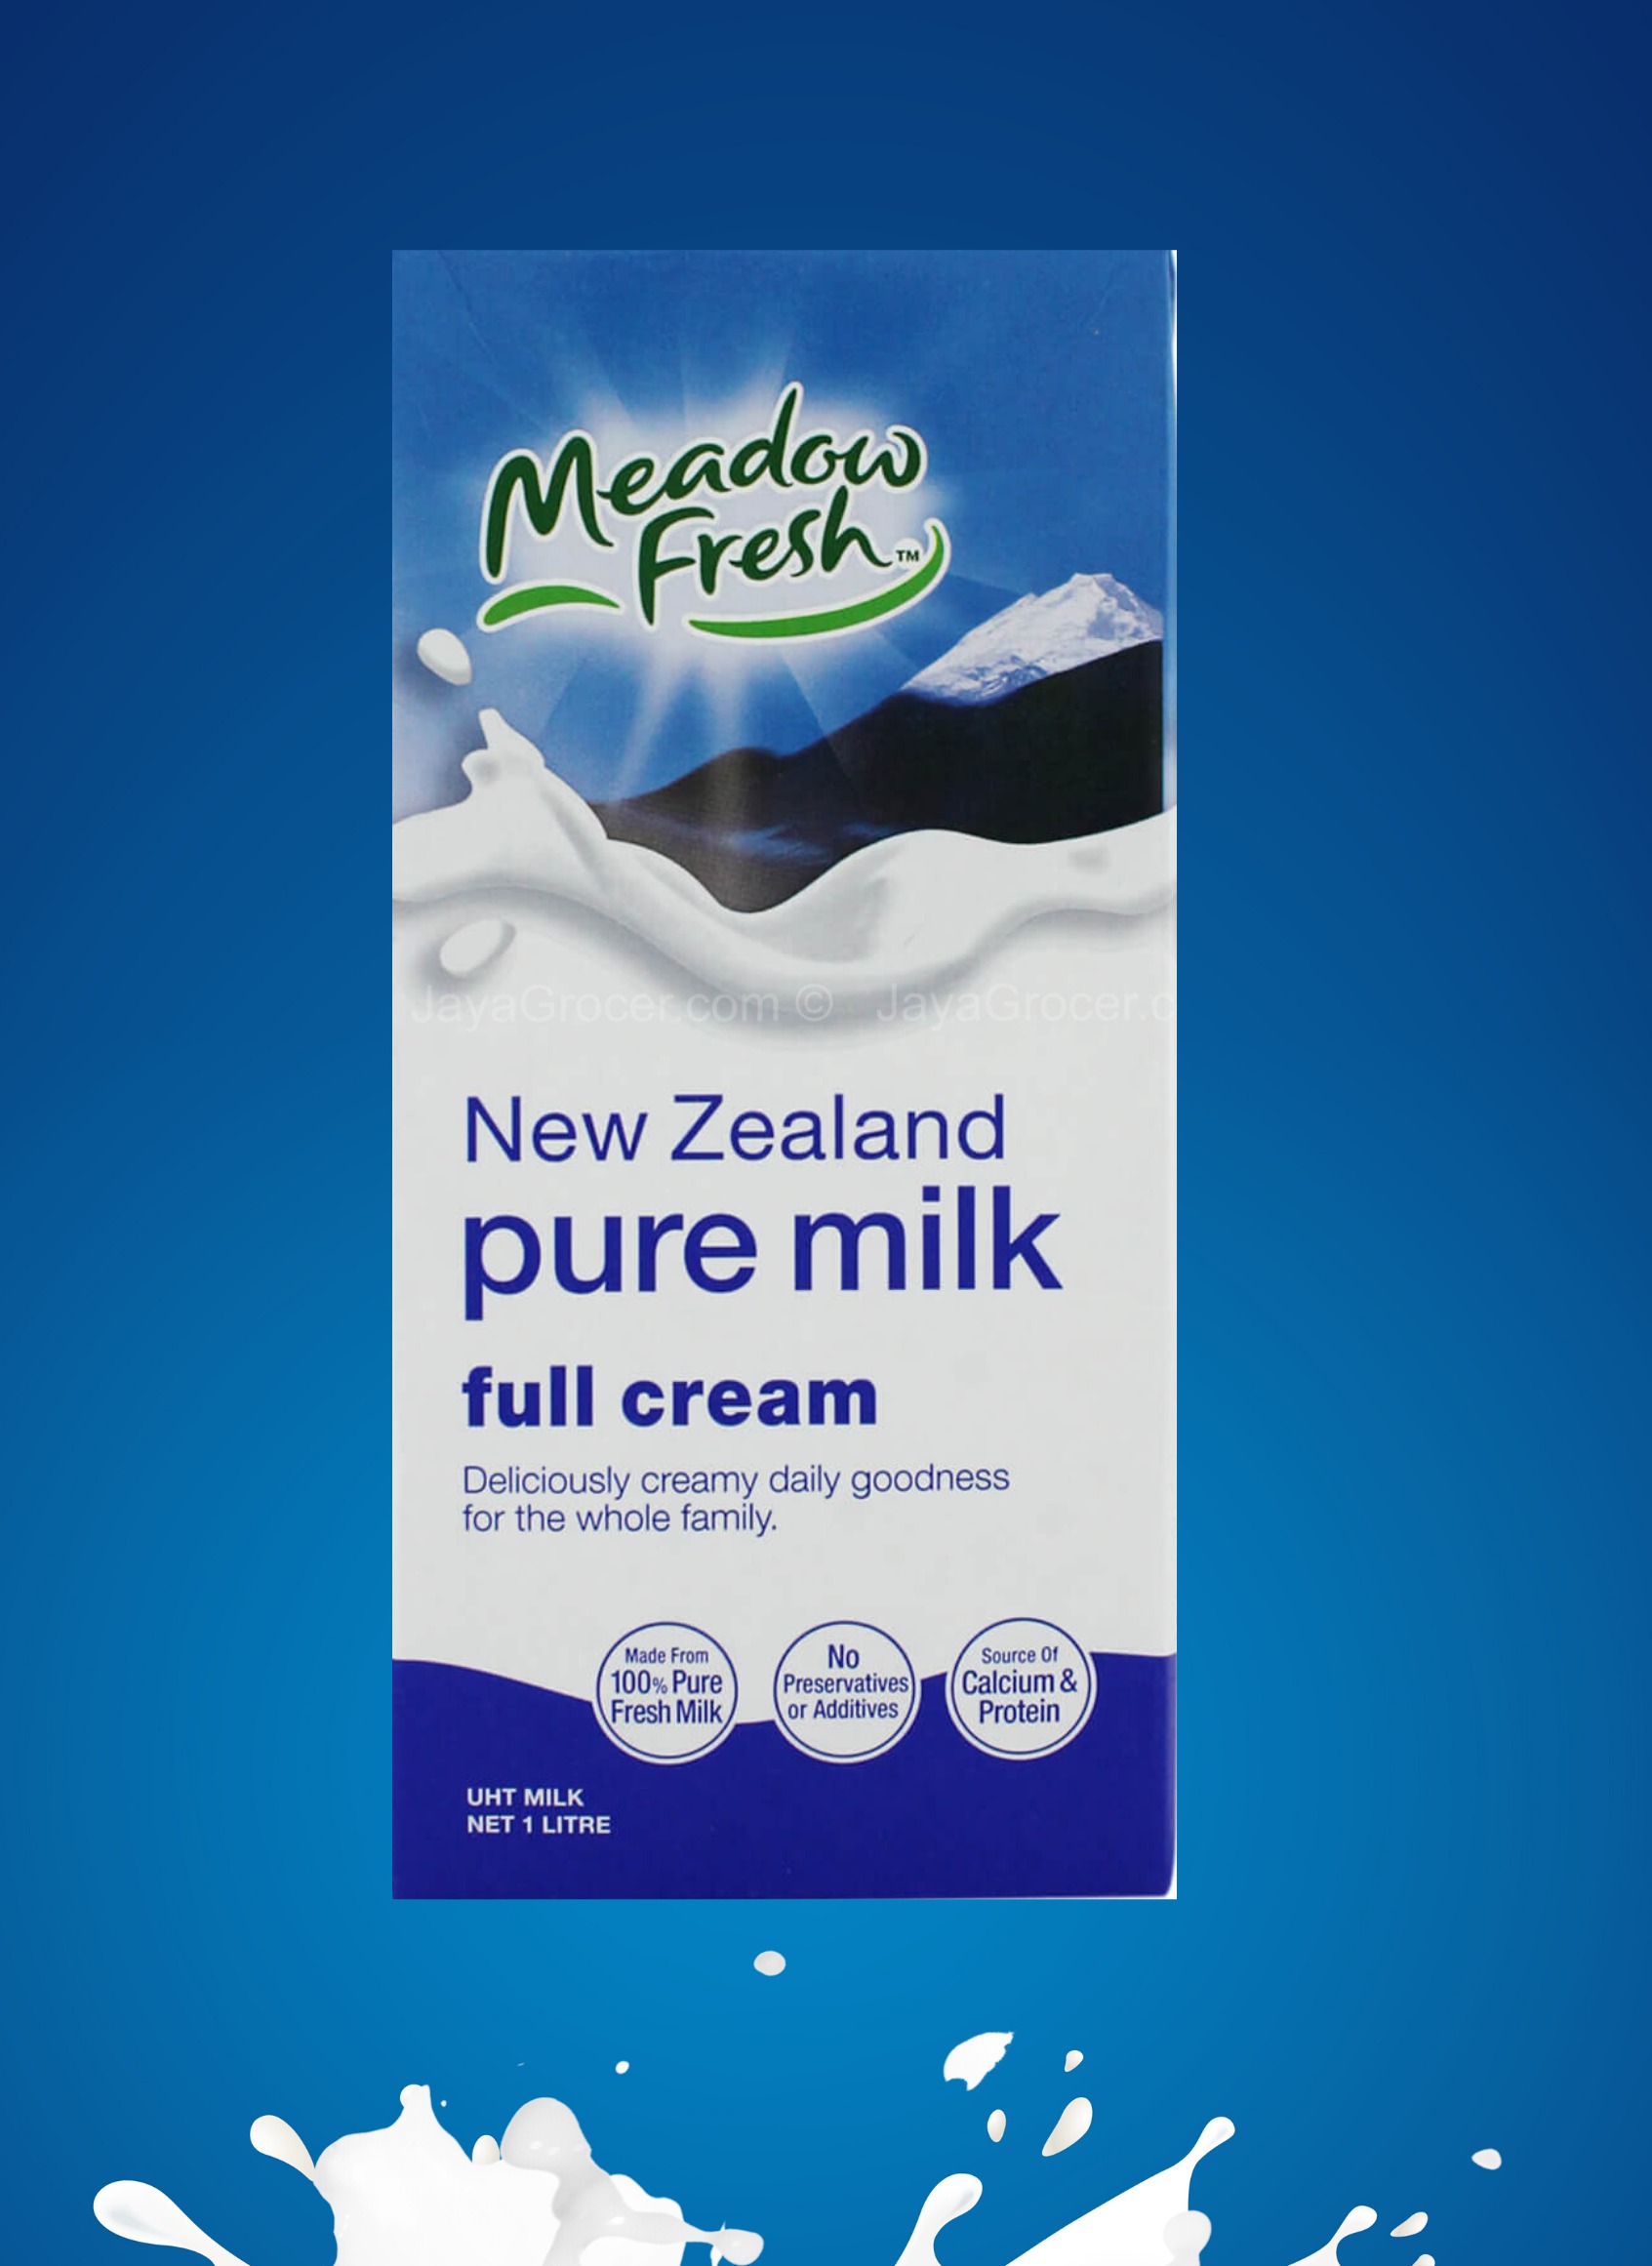 Meadow fresh milk